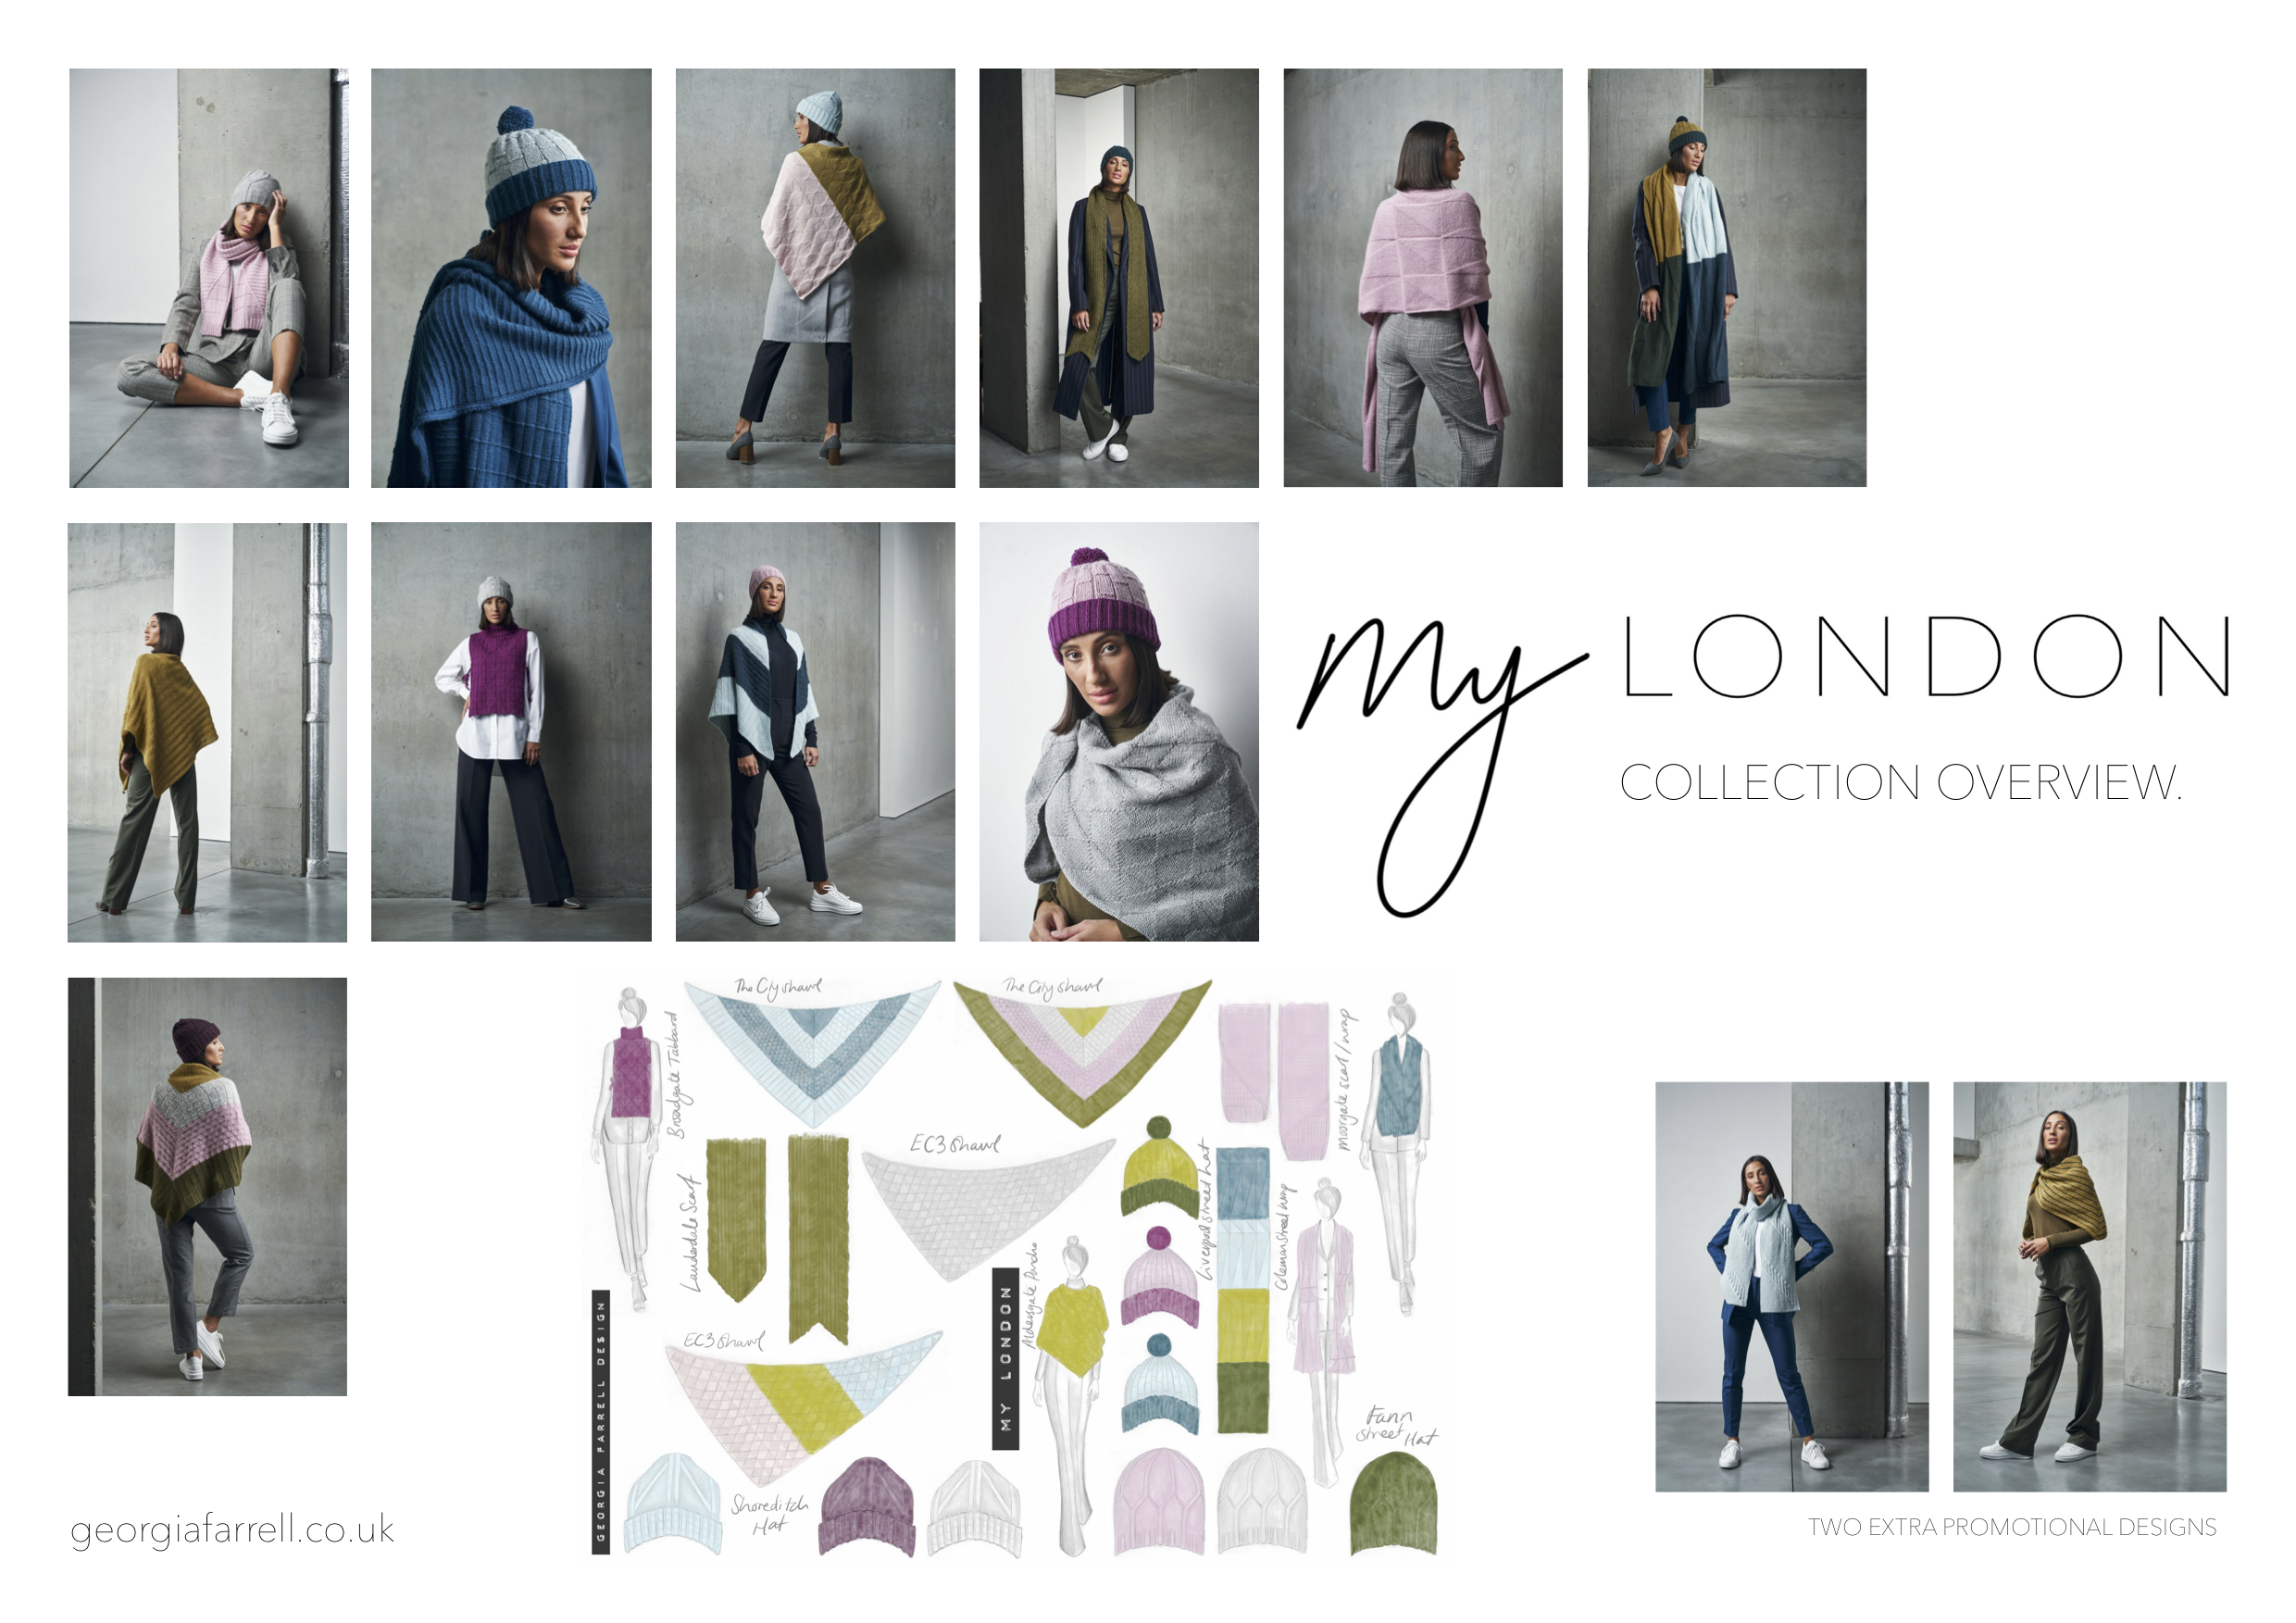 'My London' by Georgia Farrell Digital Handout2.png